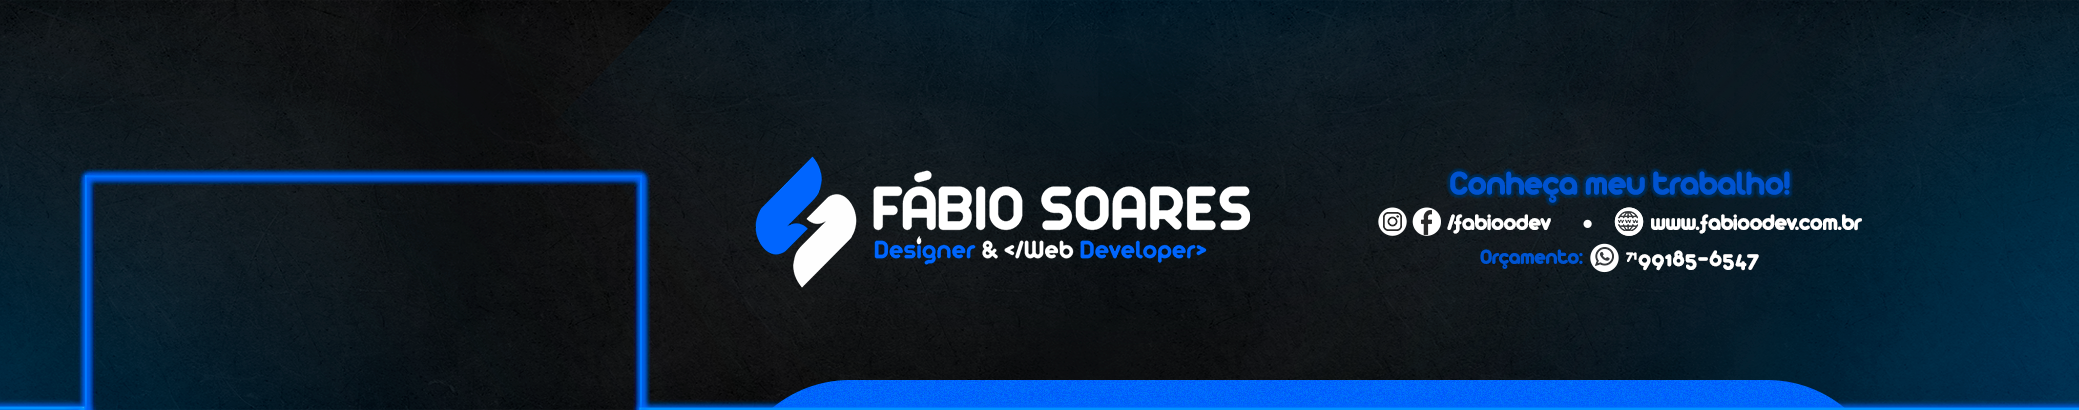 Fábio Soares's profile banner